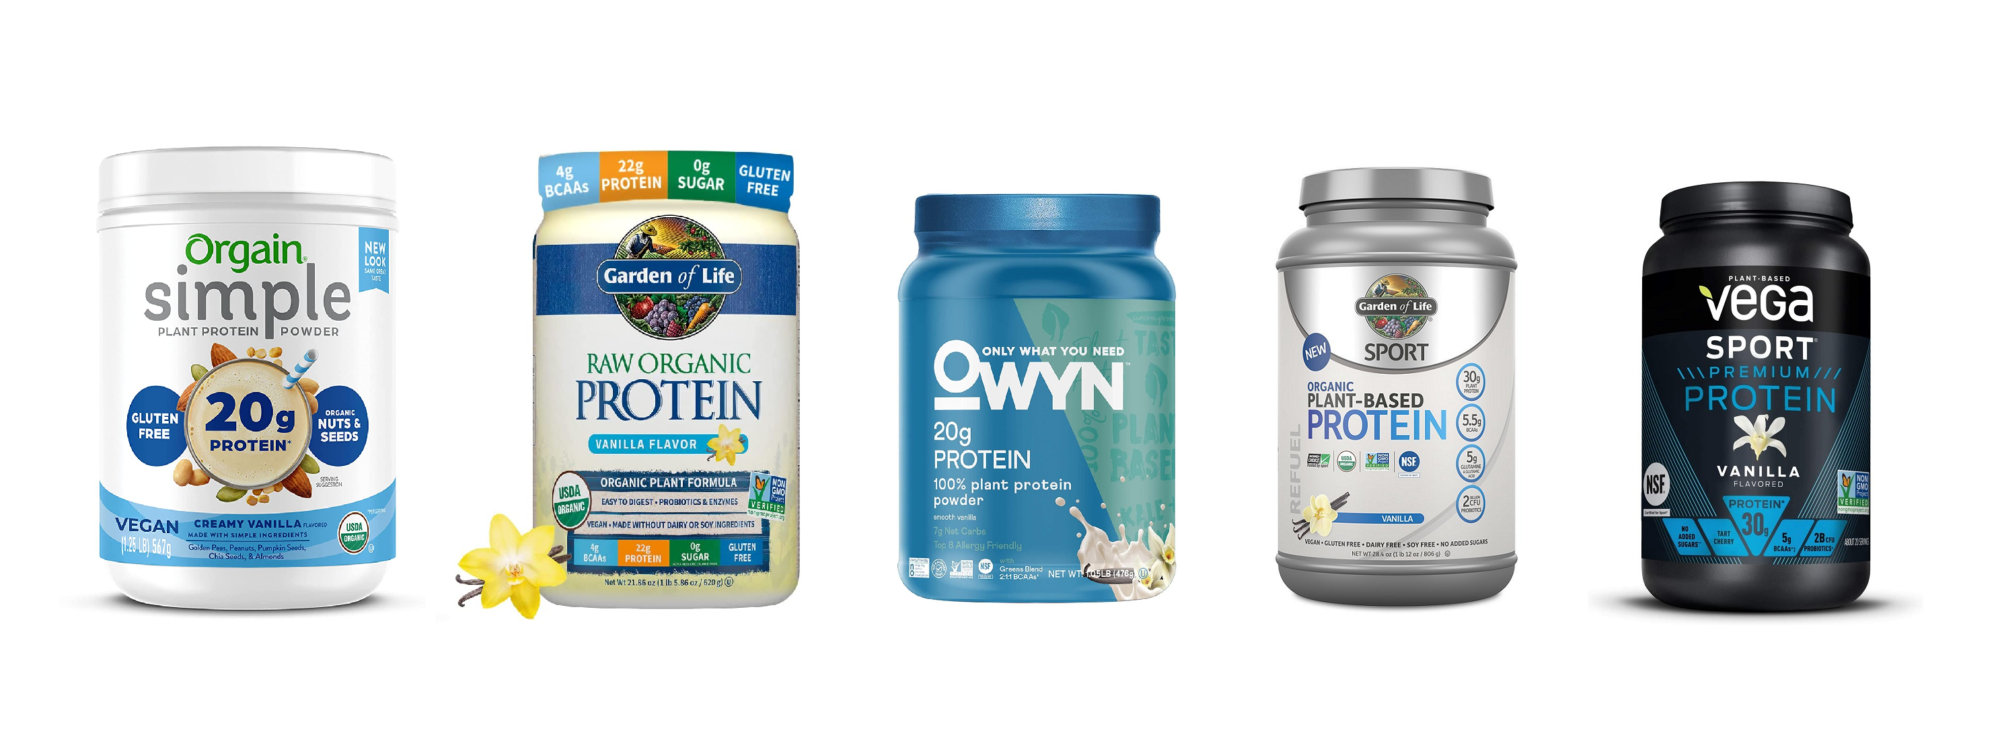 Best-Testing Vegan Protein Powder in Review